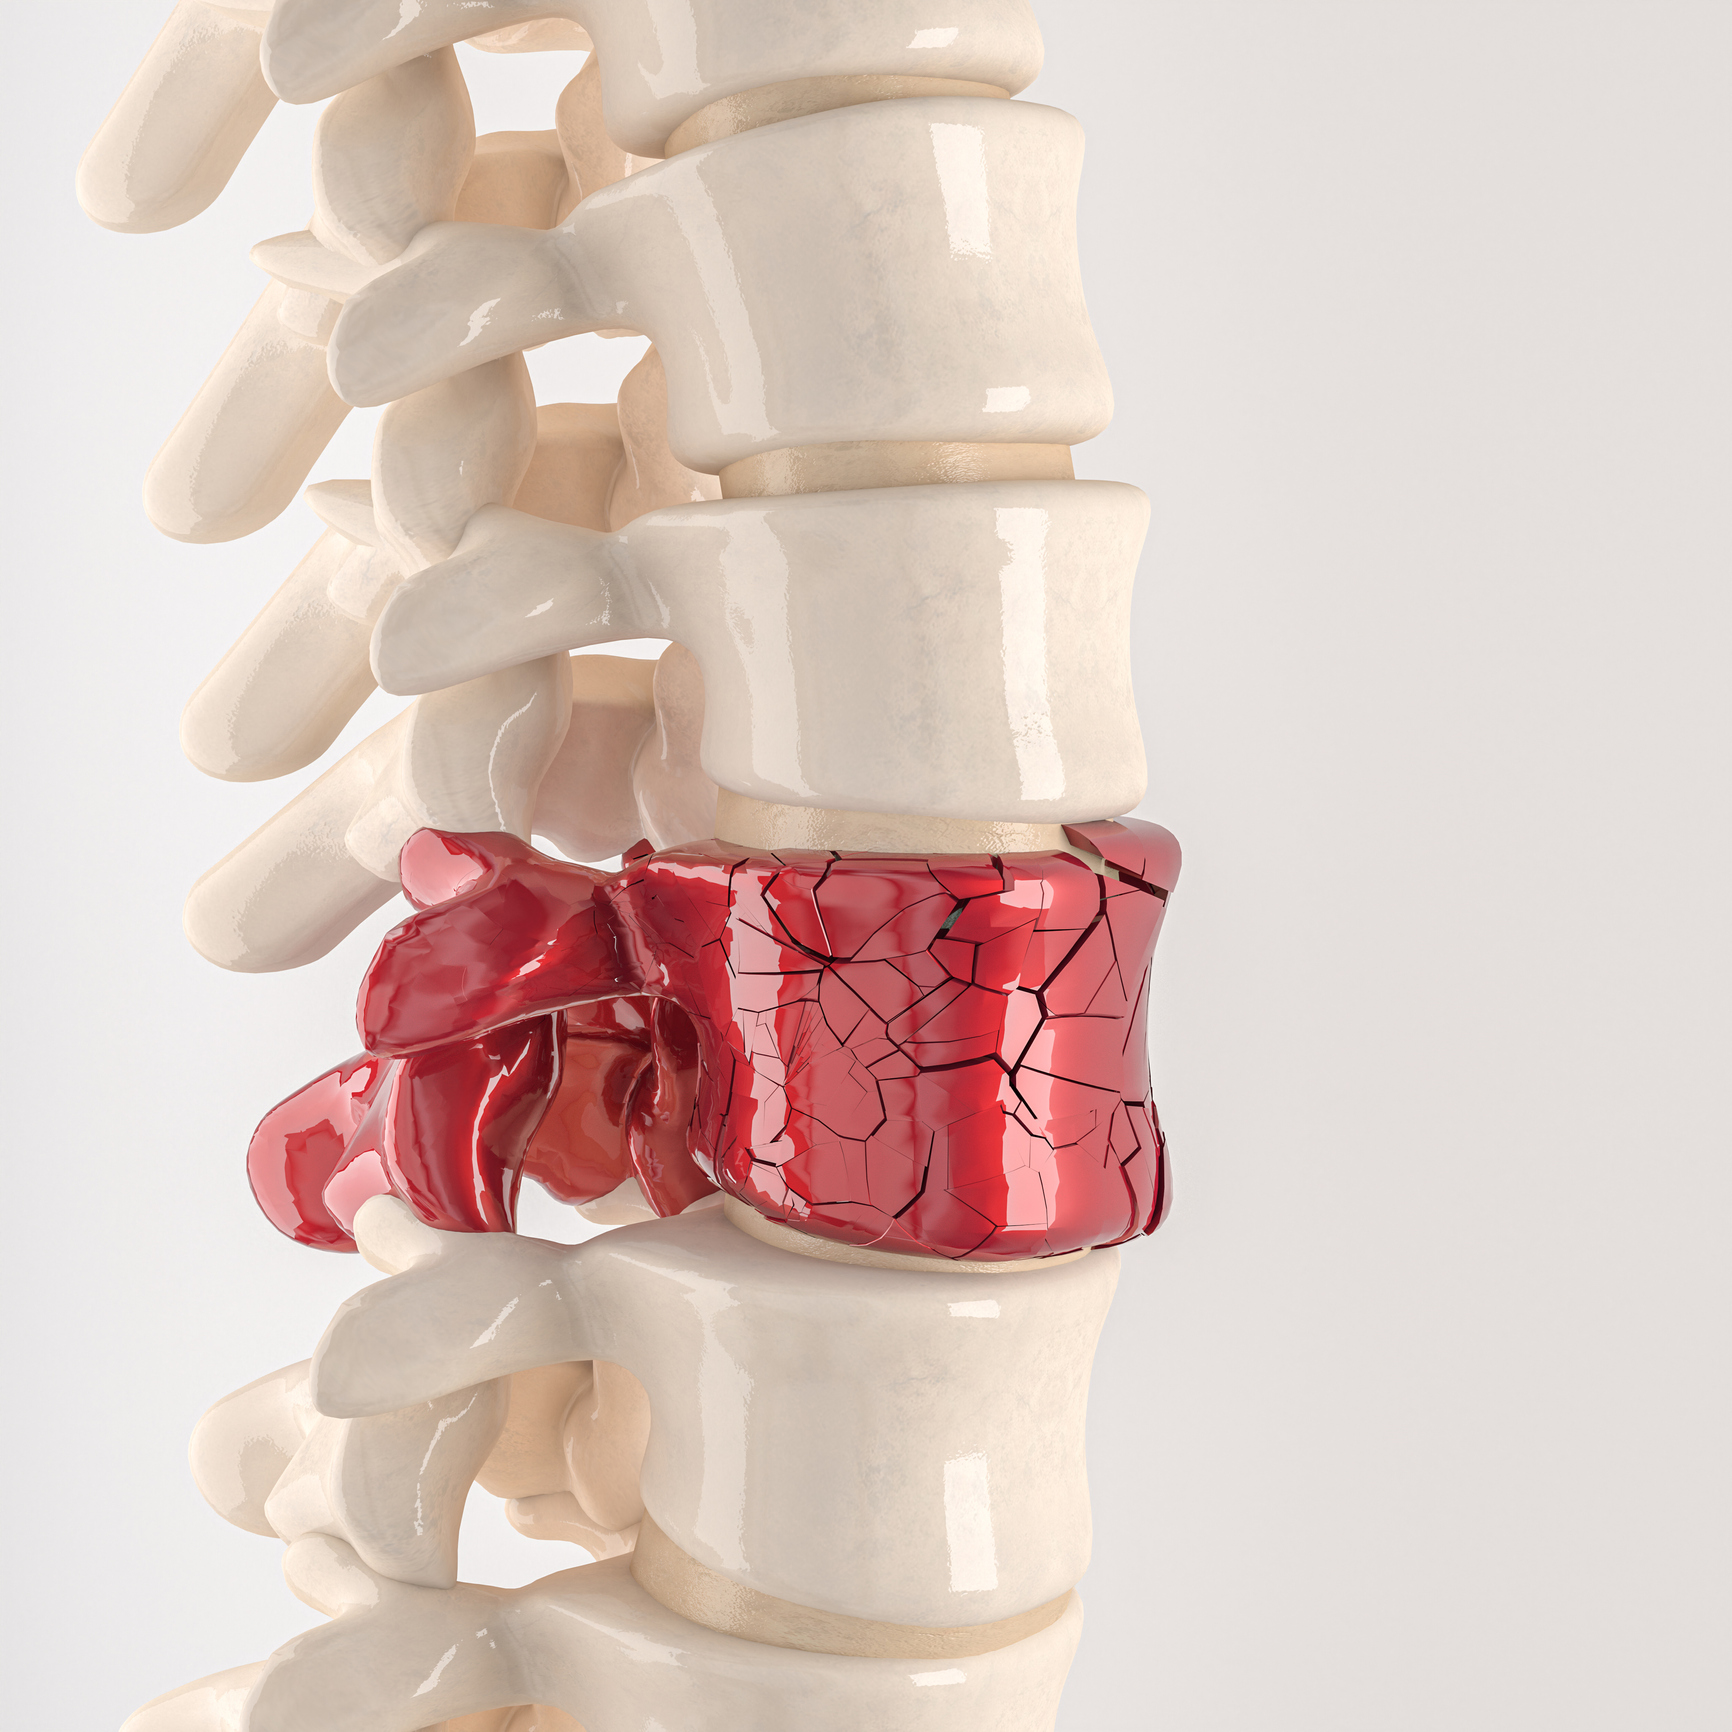 spine with shattered vertebrae. concept of physical discomfort. 3d render